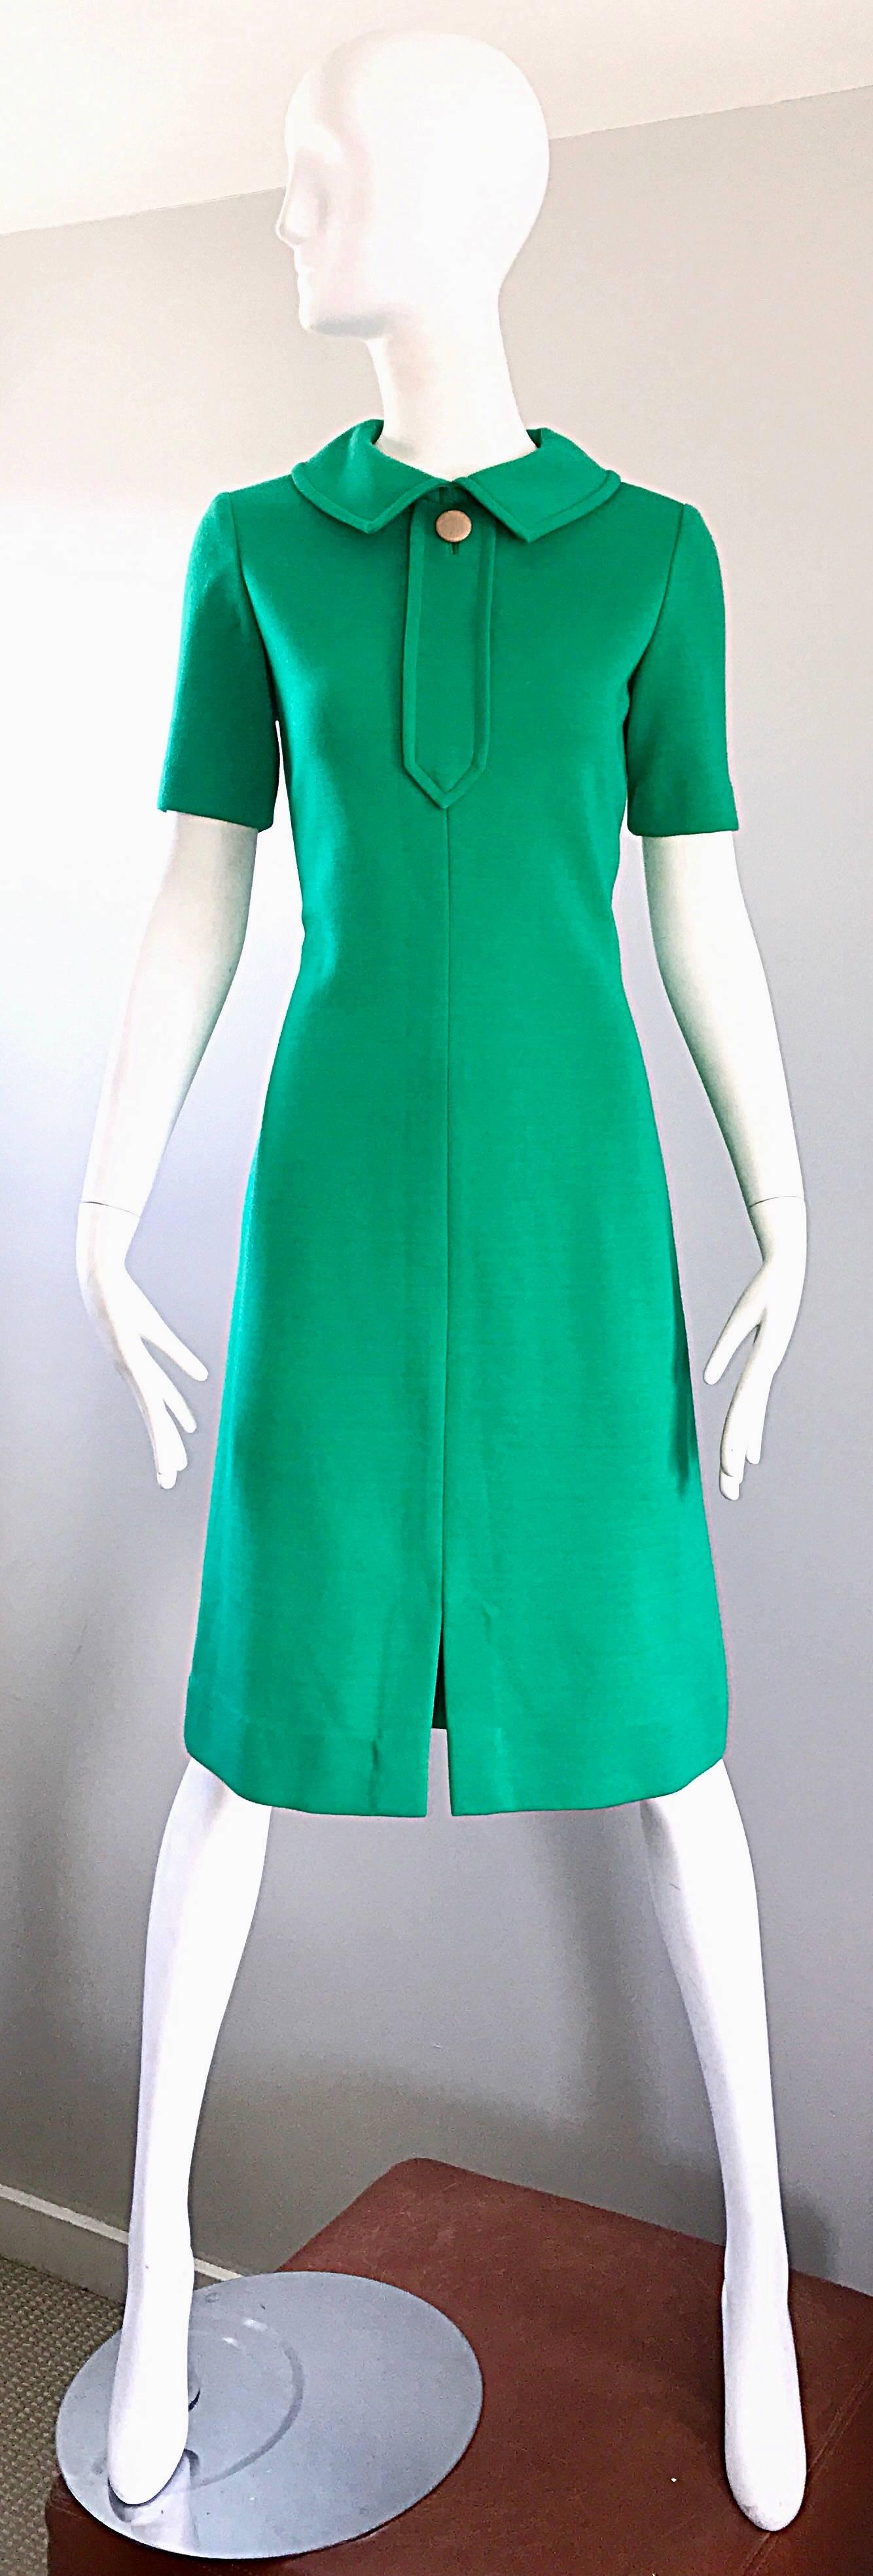 1960s Kelly Green Virgin Wool Knit 60s Vintage Mod Short Sleeve Shift Dress  For Sale 1